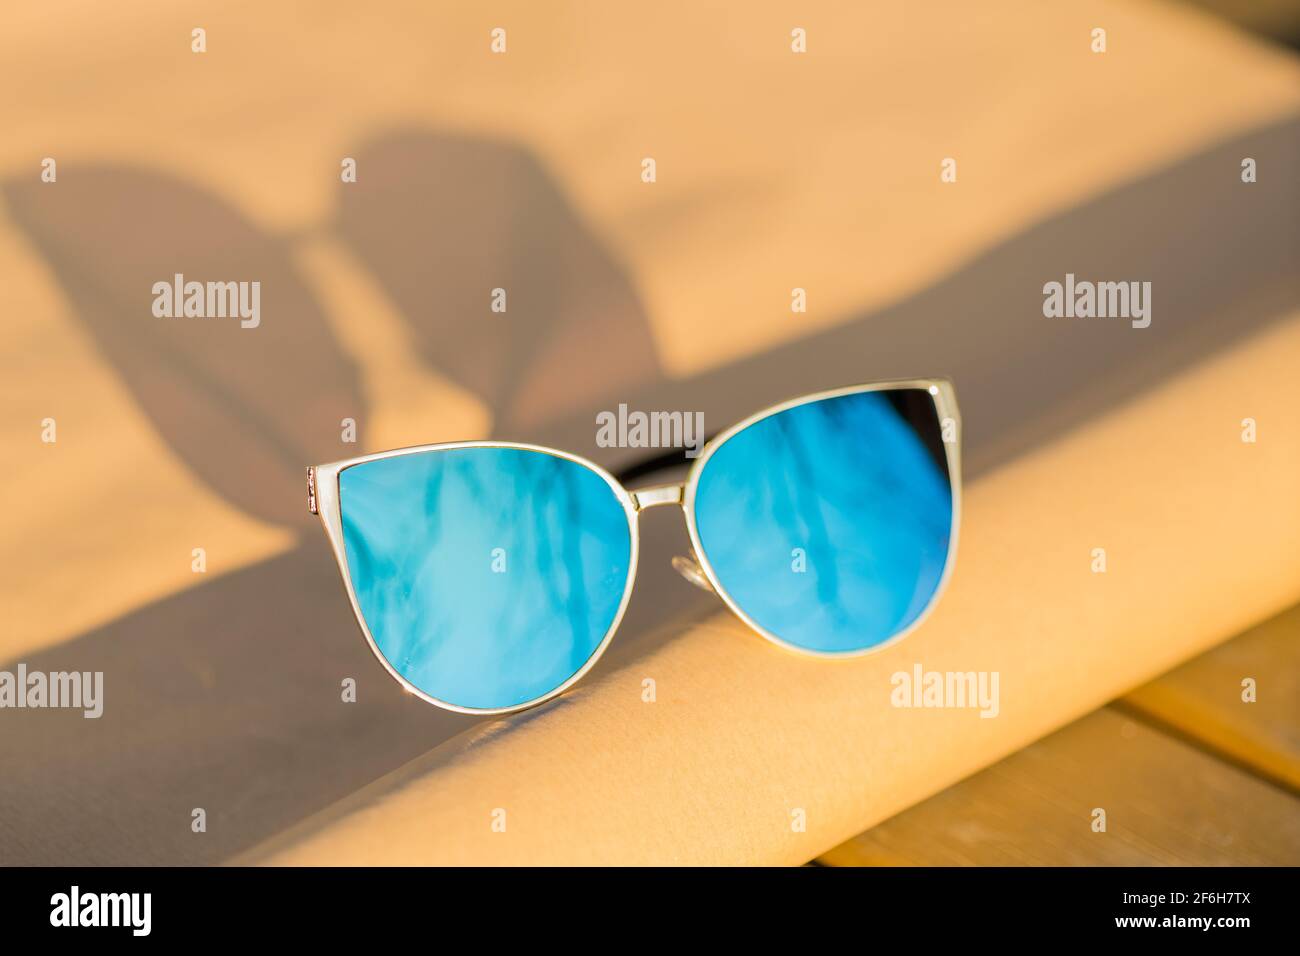 imagen Lingüística Espacio cibernético Modelo de gafas de sol de ojo de gato de moda para mujeres con grandes  lentes azules disparar fuera en un día de verano closeup. Enfoque selectivo  Fotografía de stock - Alamy